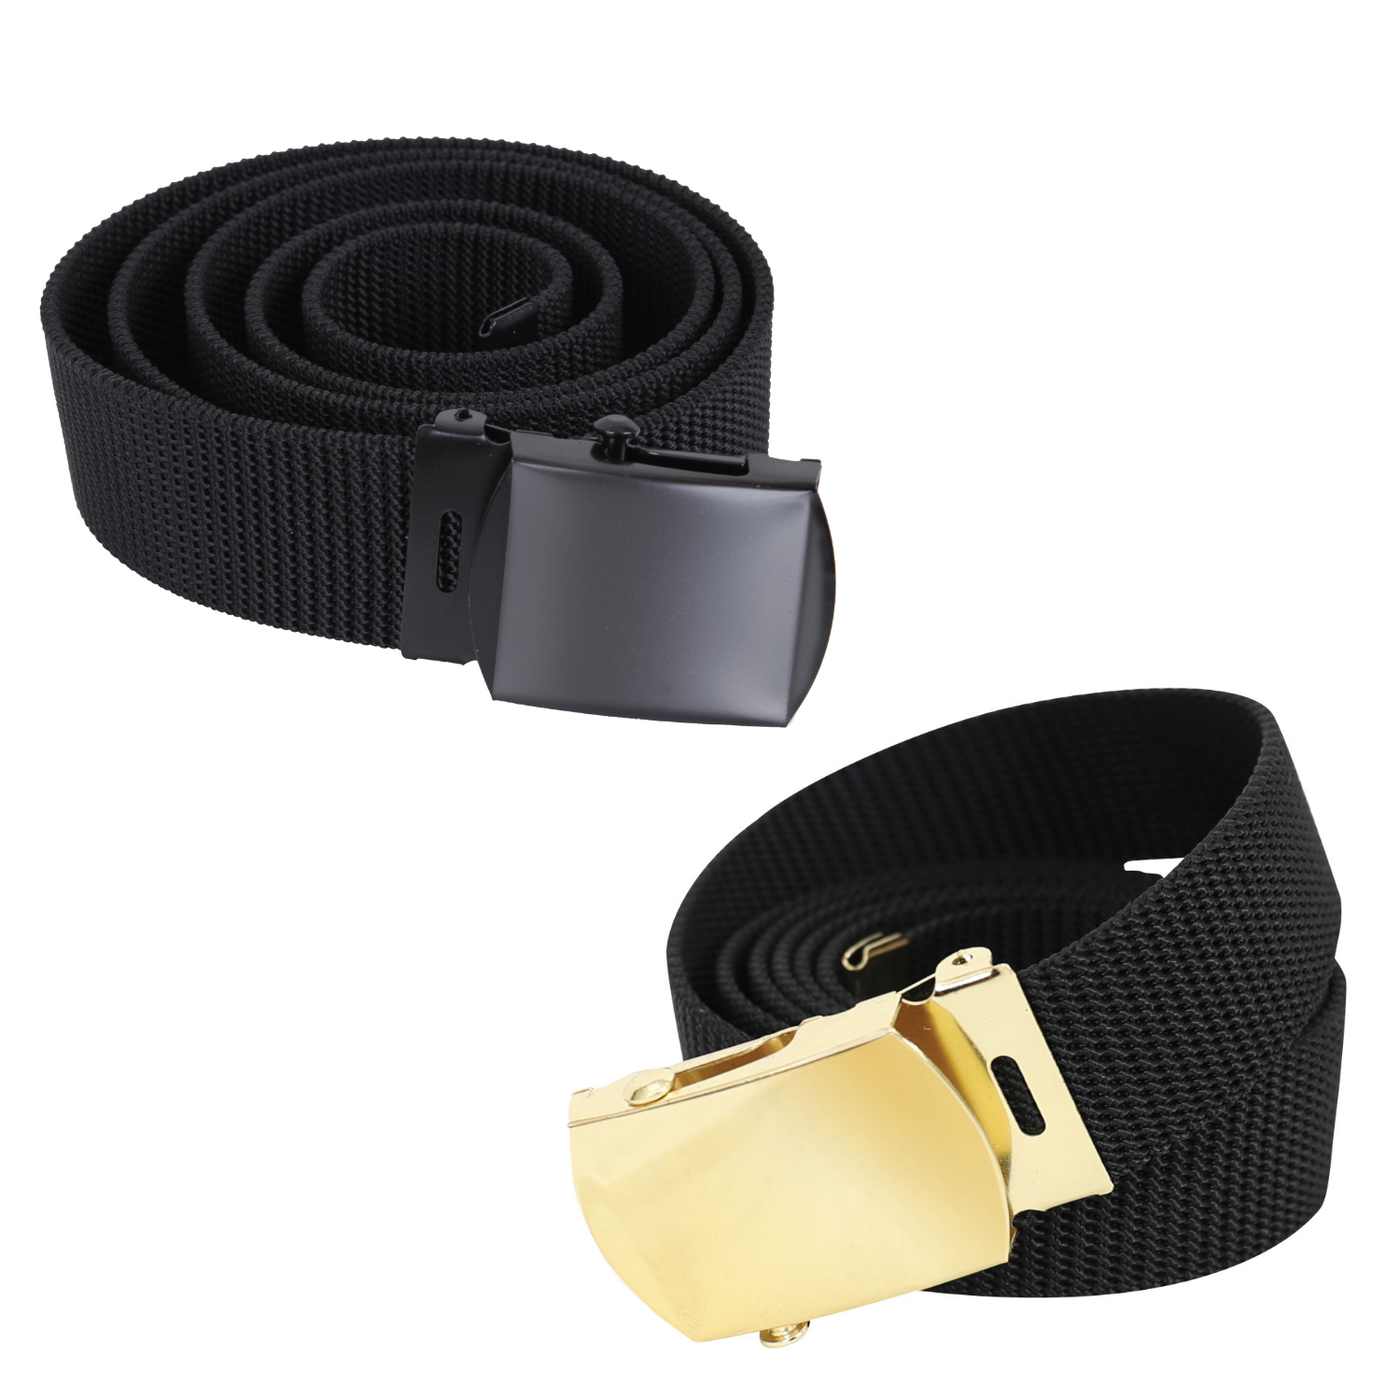 Rothco Nylon Web Belt - Black Webbing 54 Inches / Gold